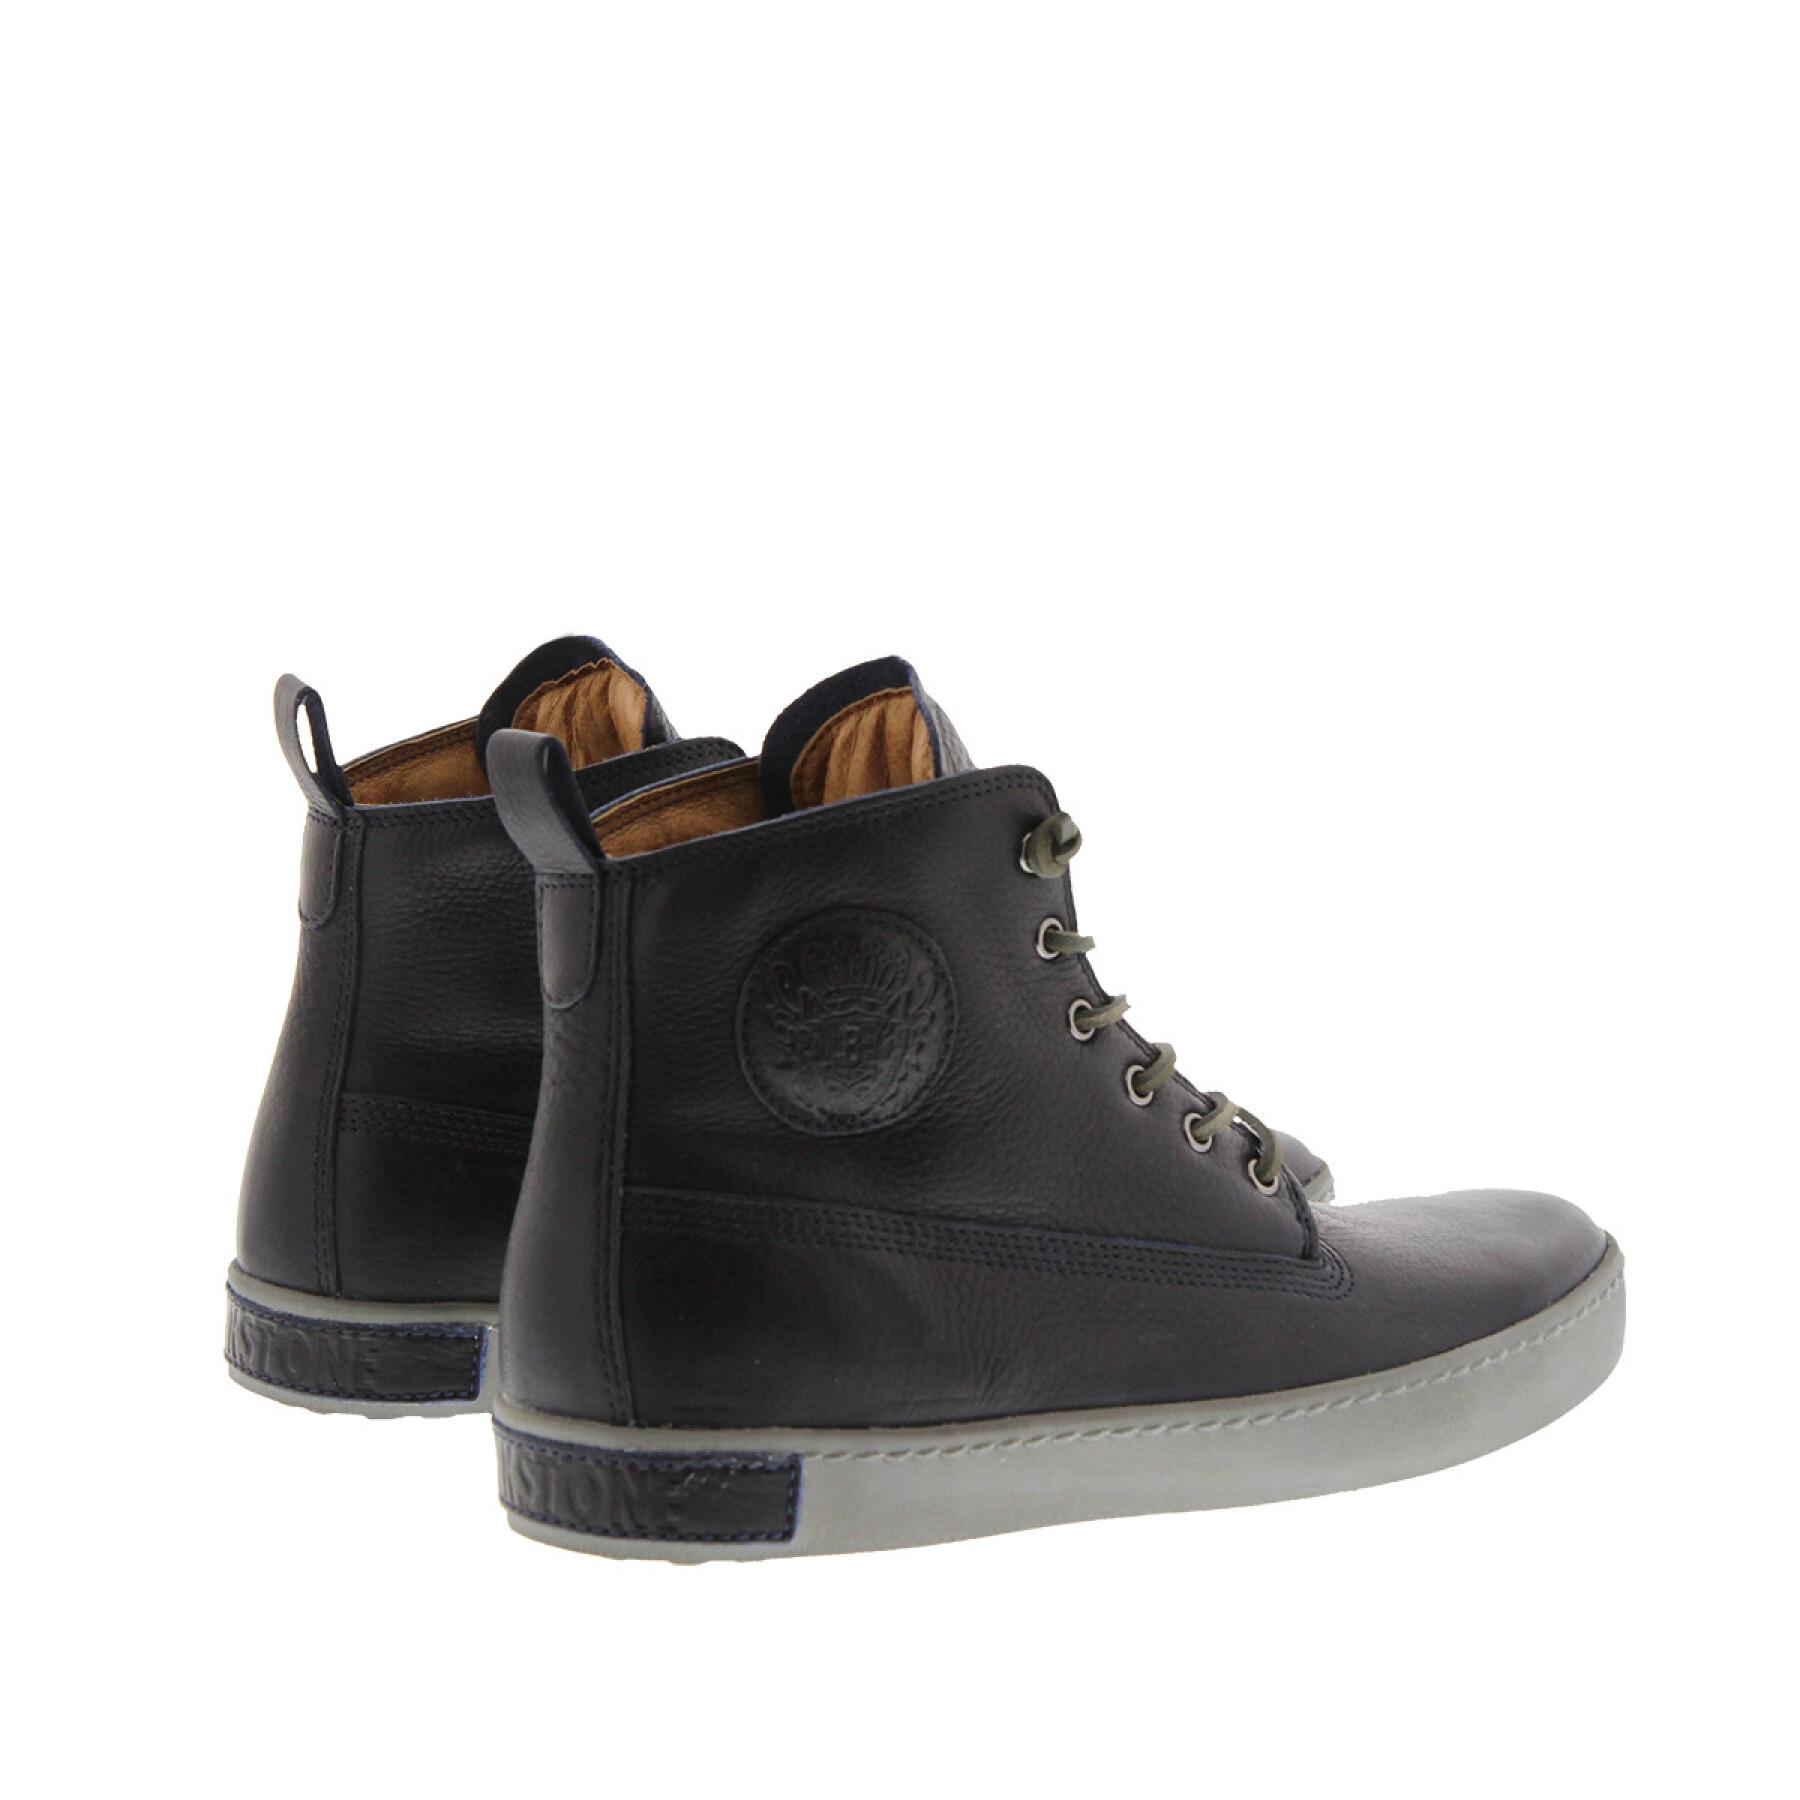 Schuhe Blackstone Original 6'' Boots